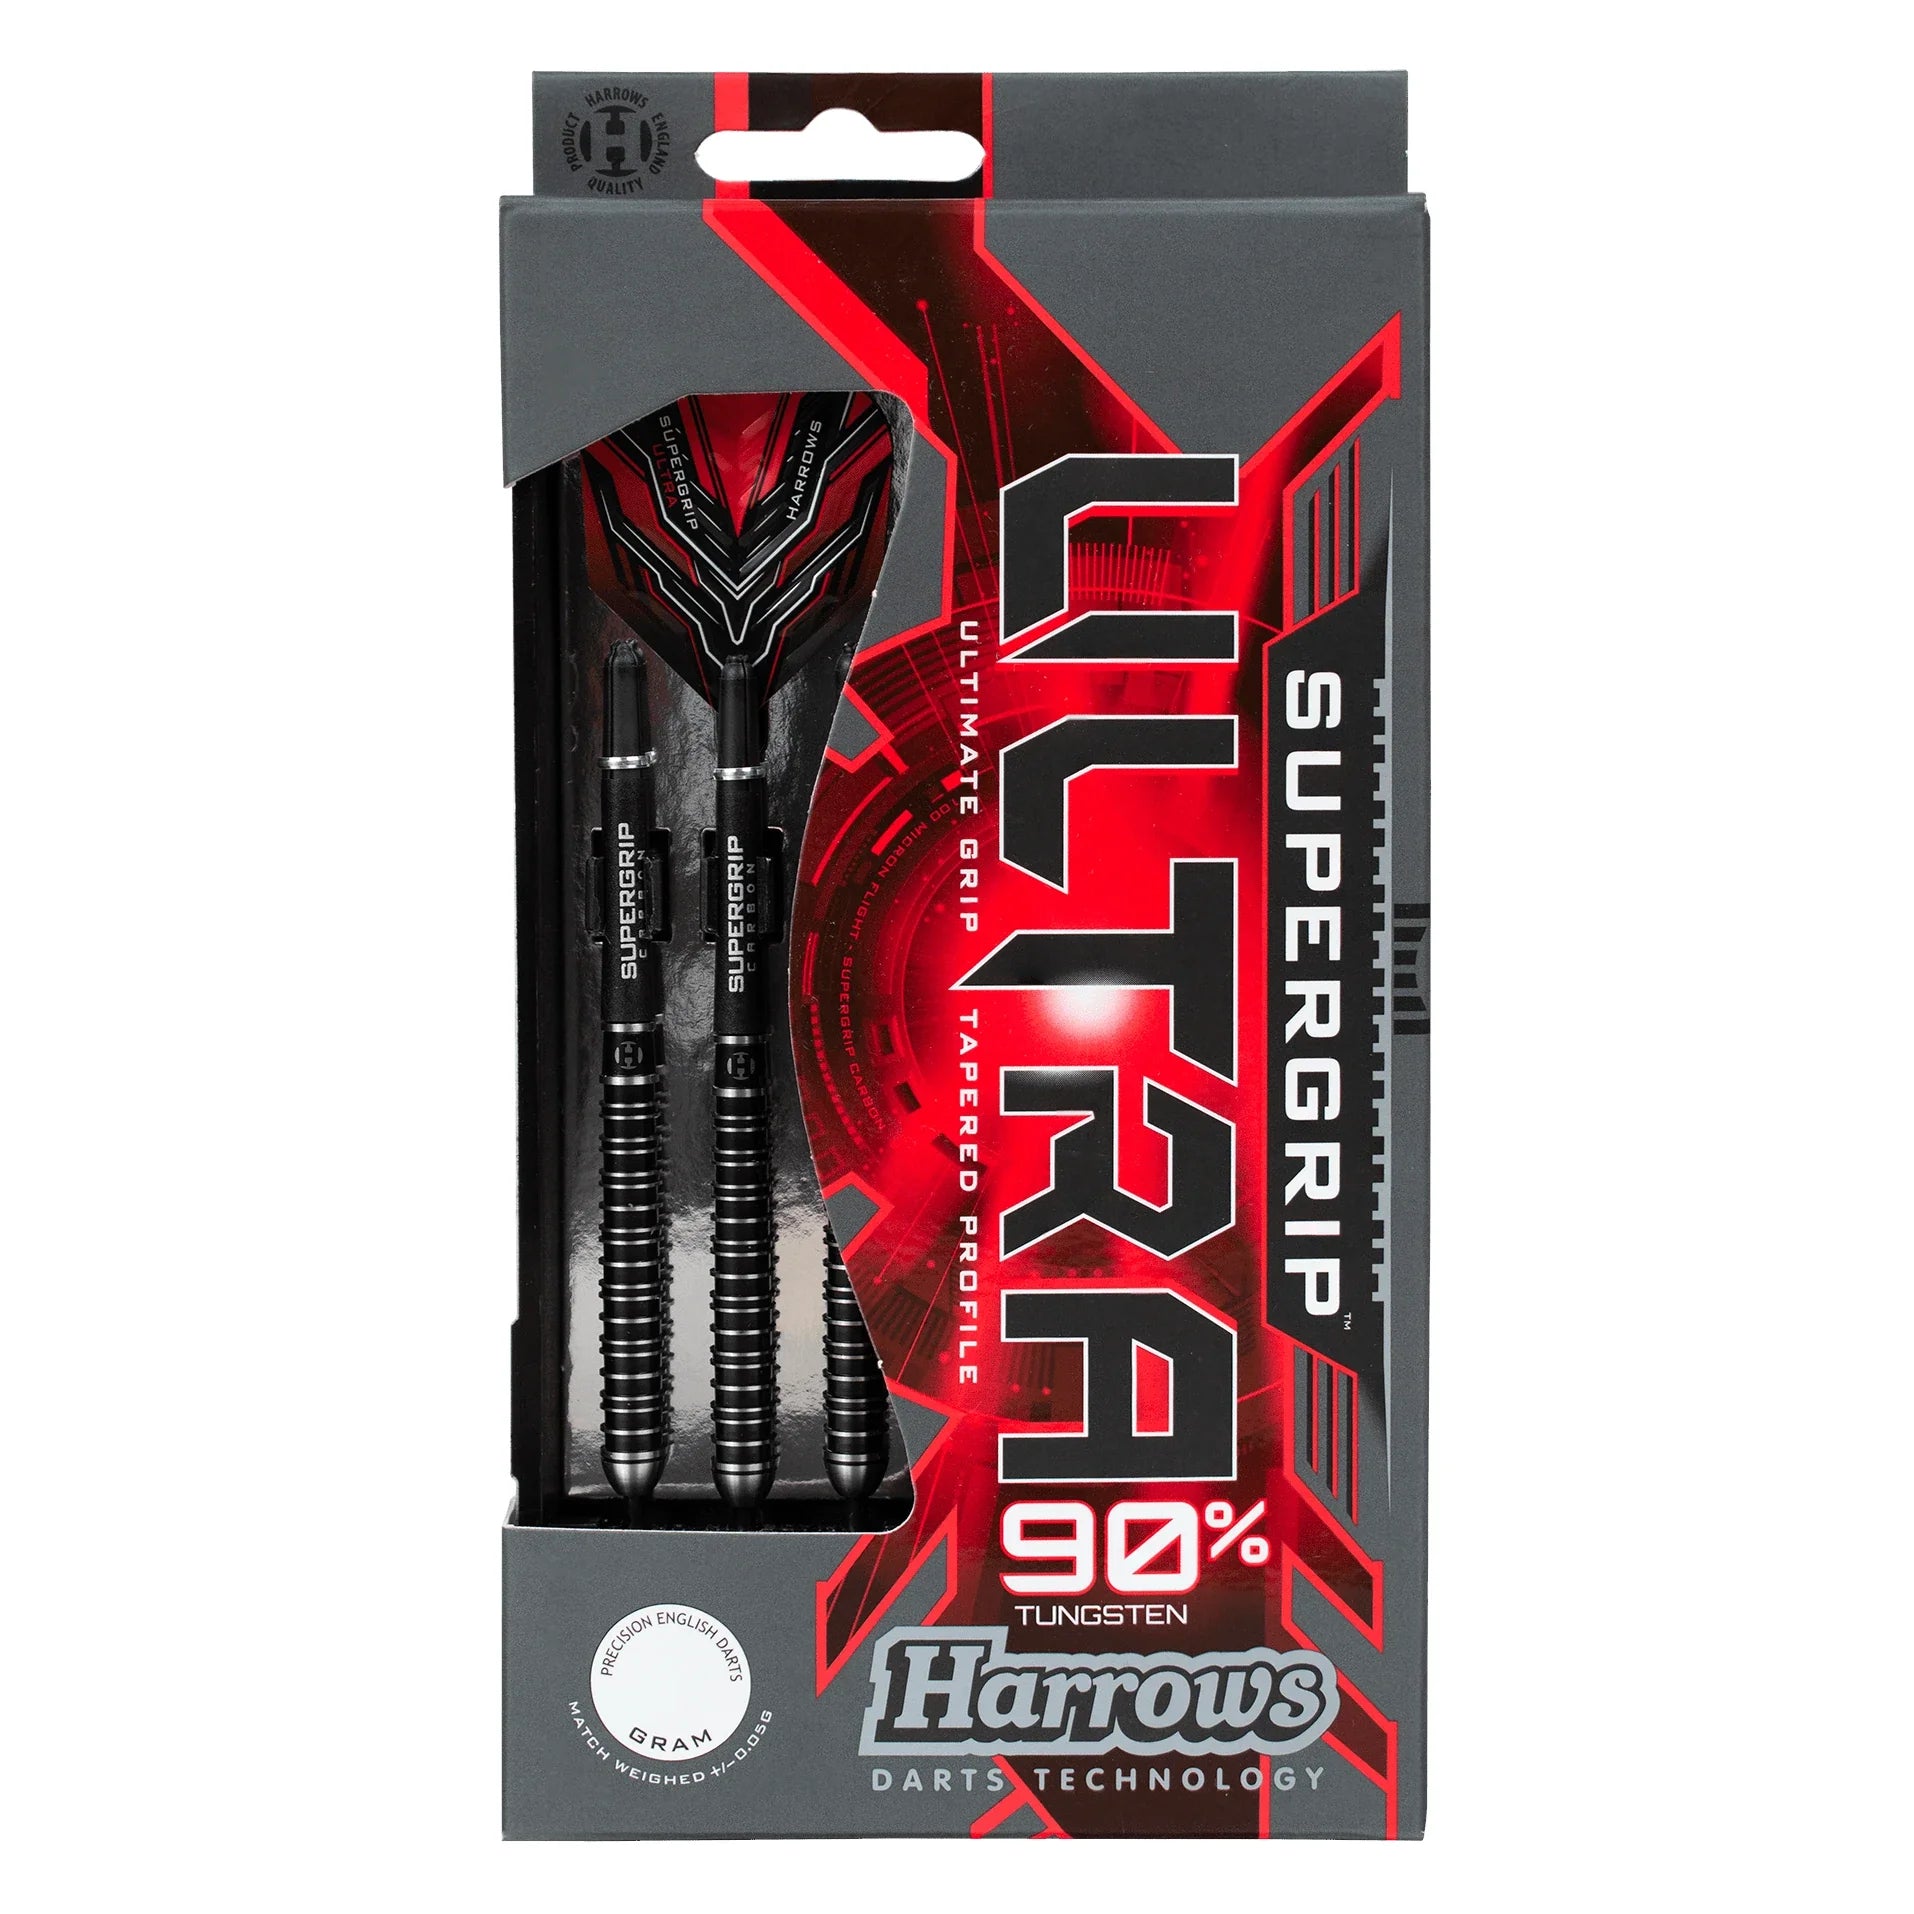 Harrows Supergrip Ultra 30g Darts